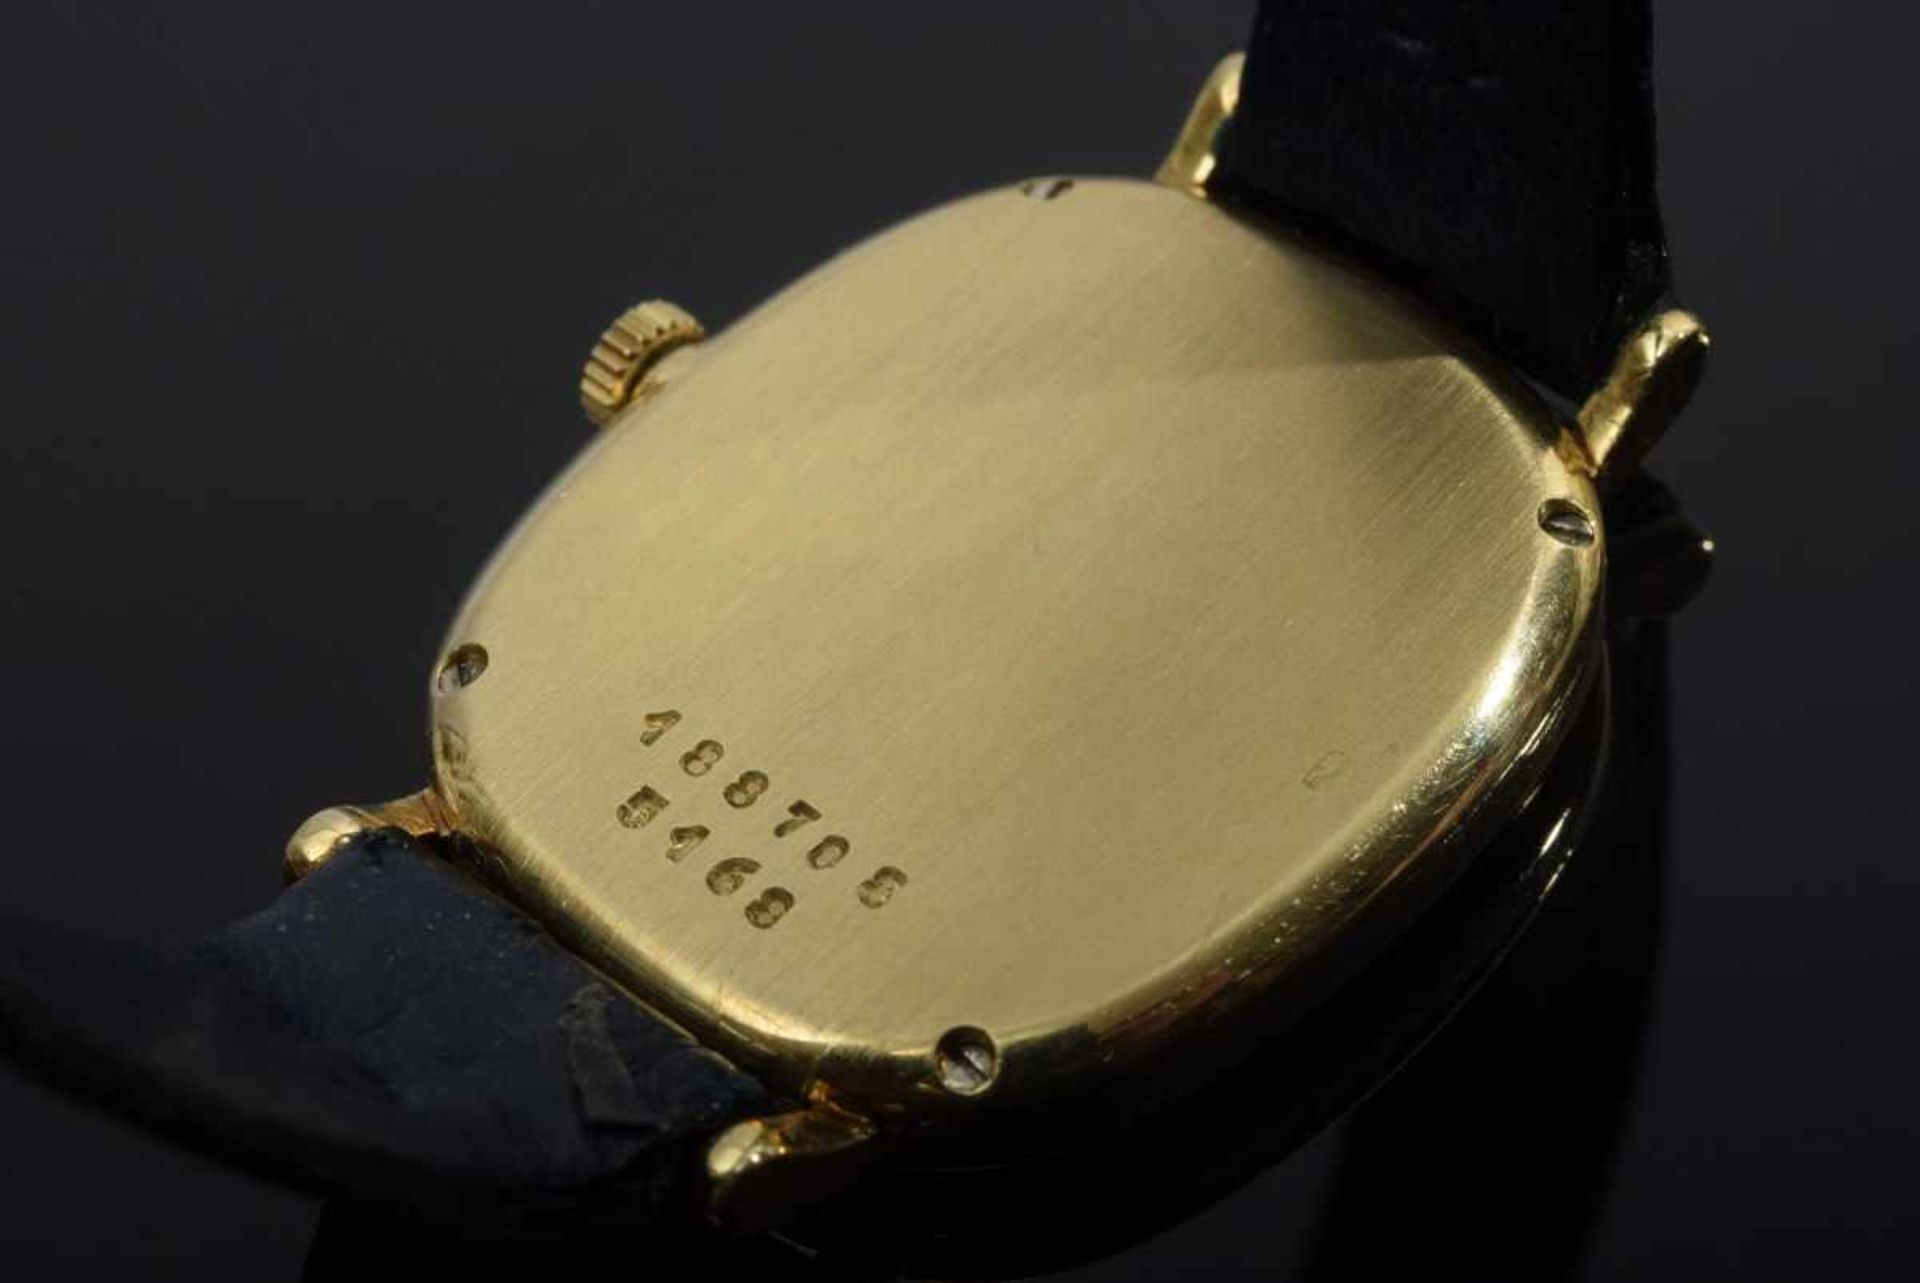 Classic GG 750 Chopard ladies' watch, quartz movement, roman numerals, minute indices, white dial, - Image 2 of 6